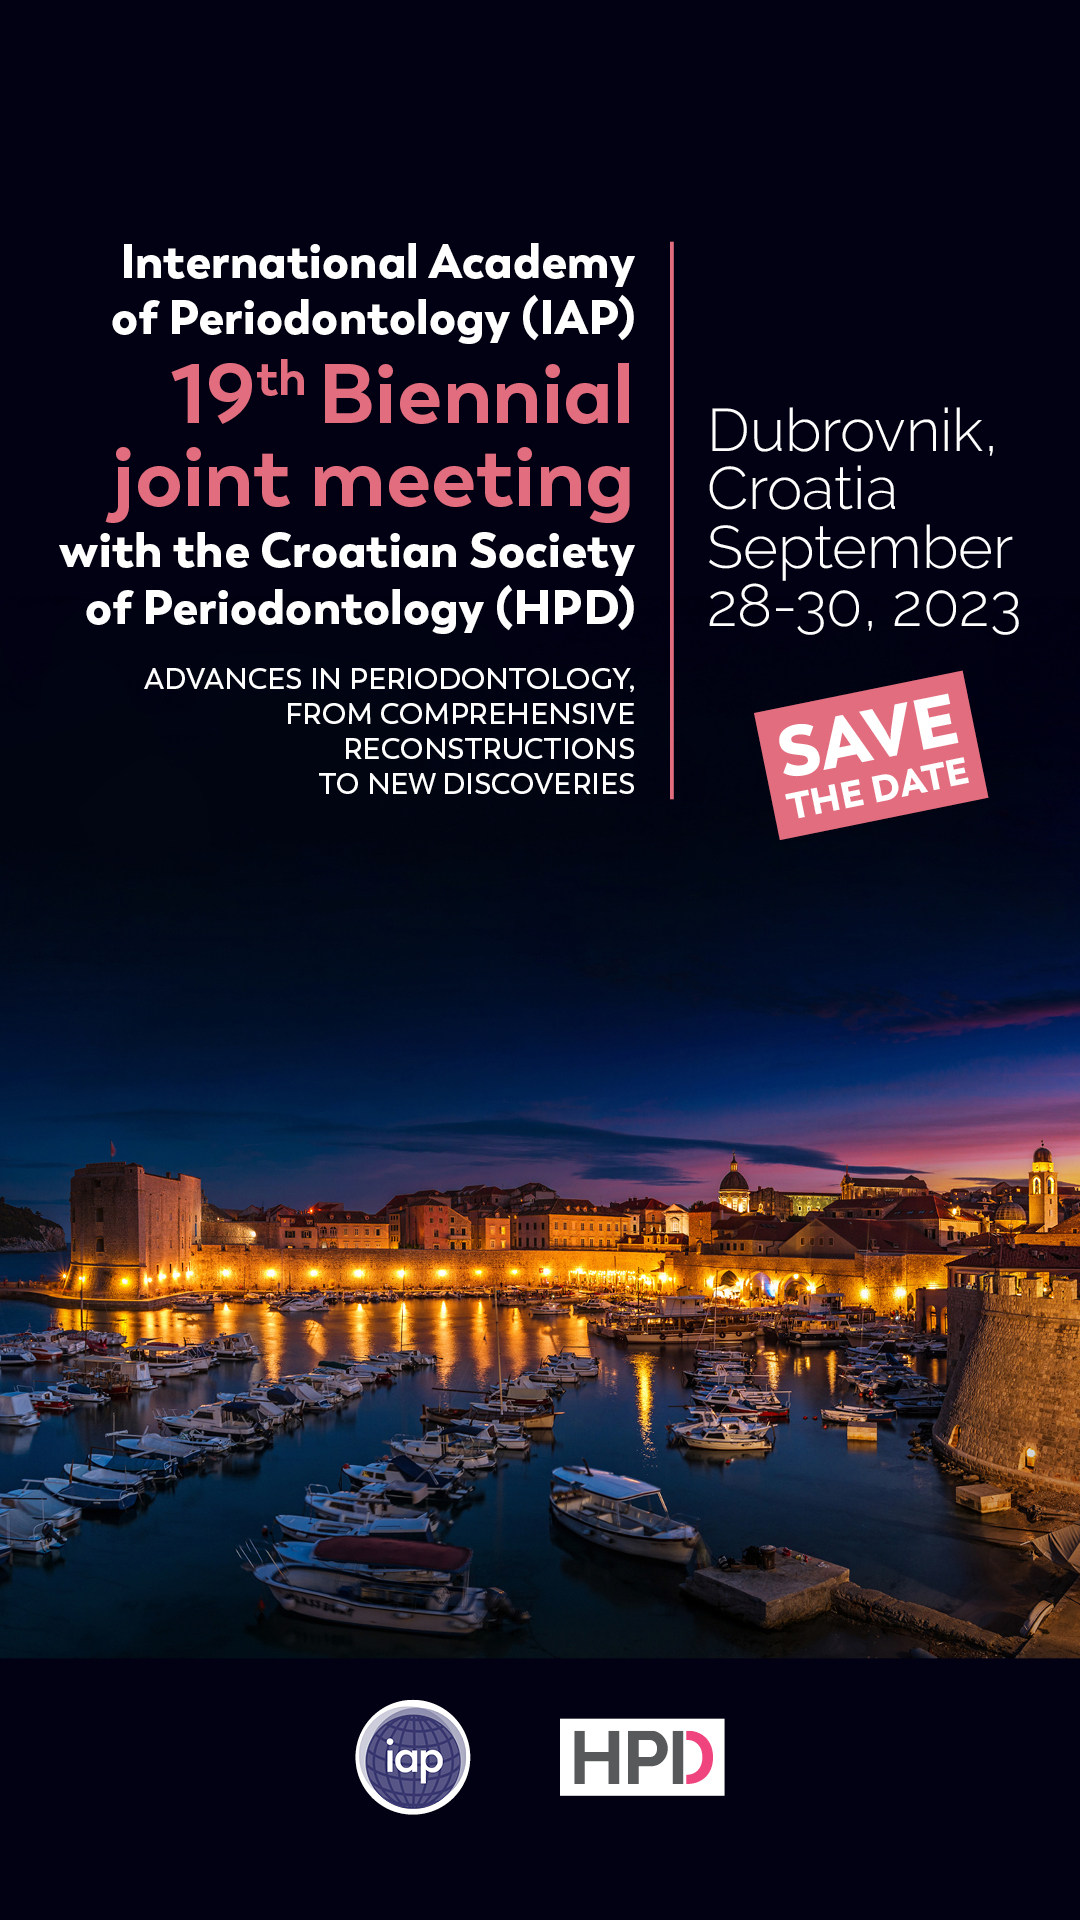 International Academy of Periodontology 19th Biennial Joint Meeting